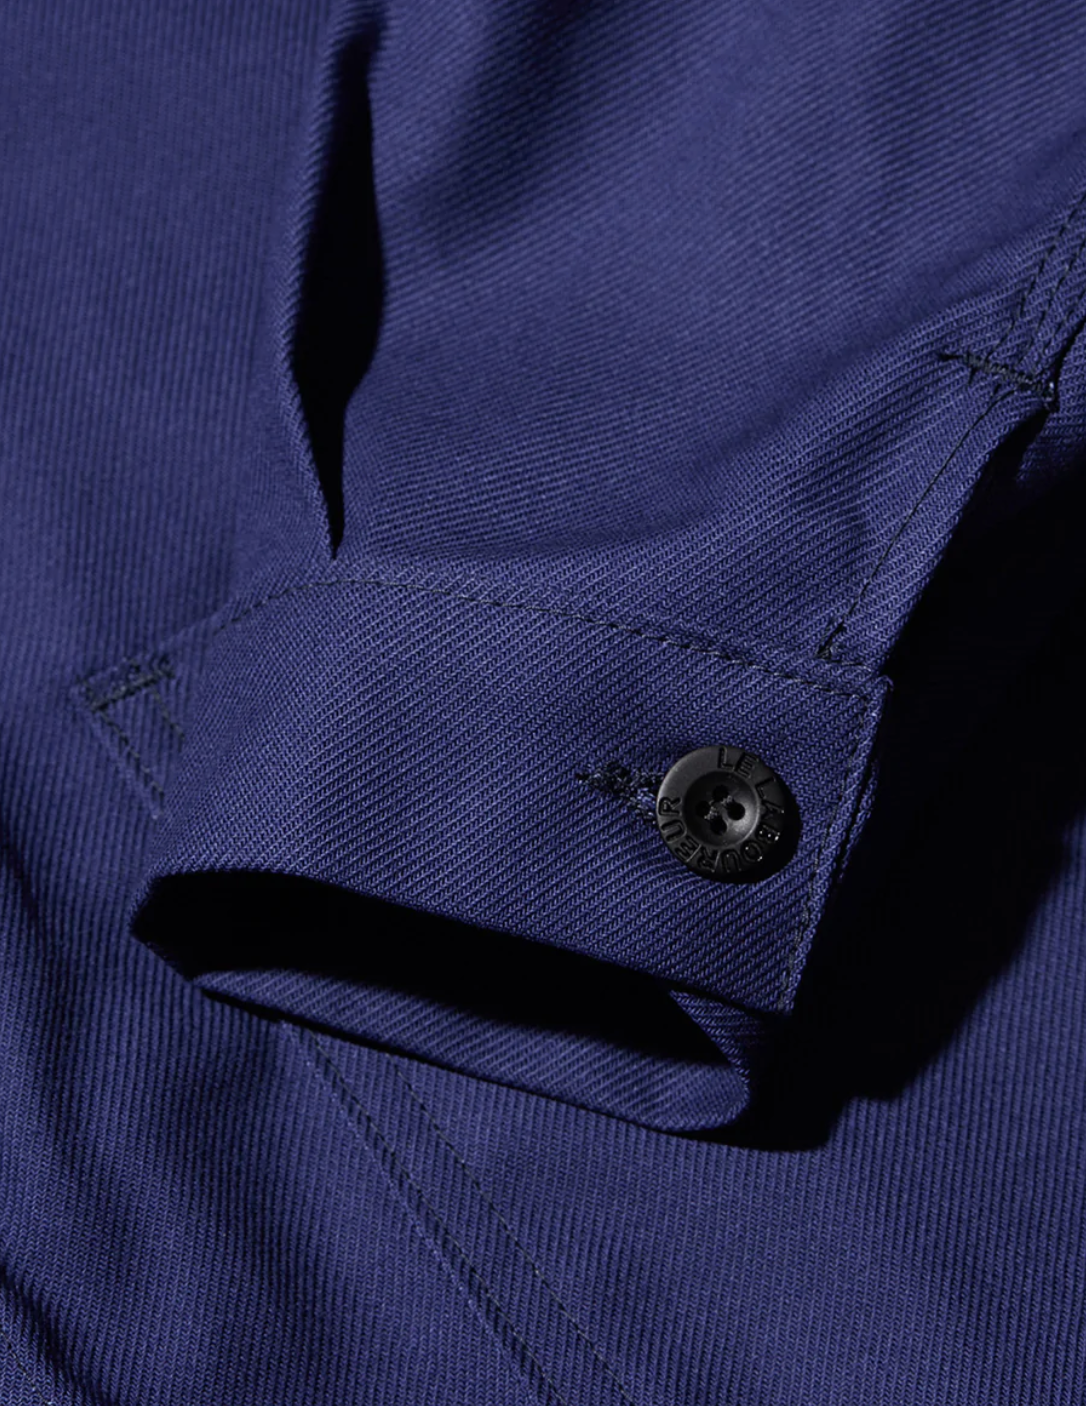 Le Laboureur French work jacket Bugatti blue